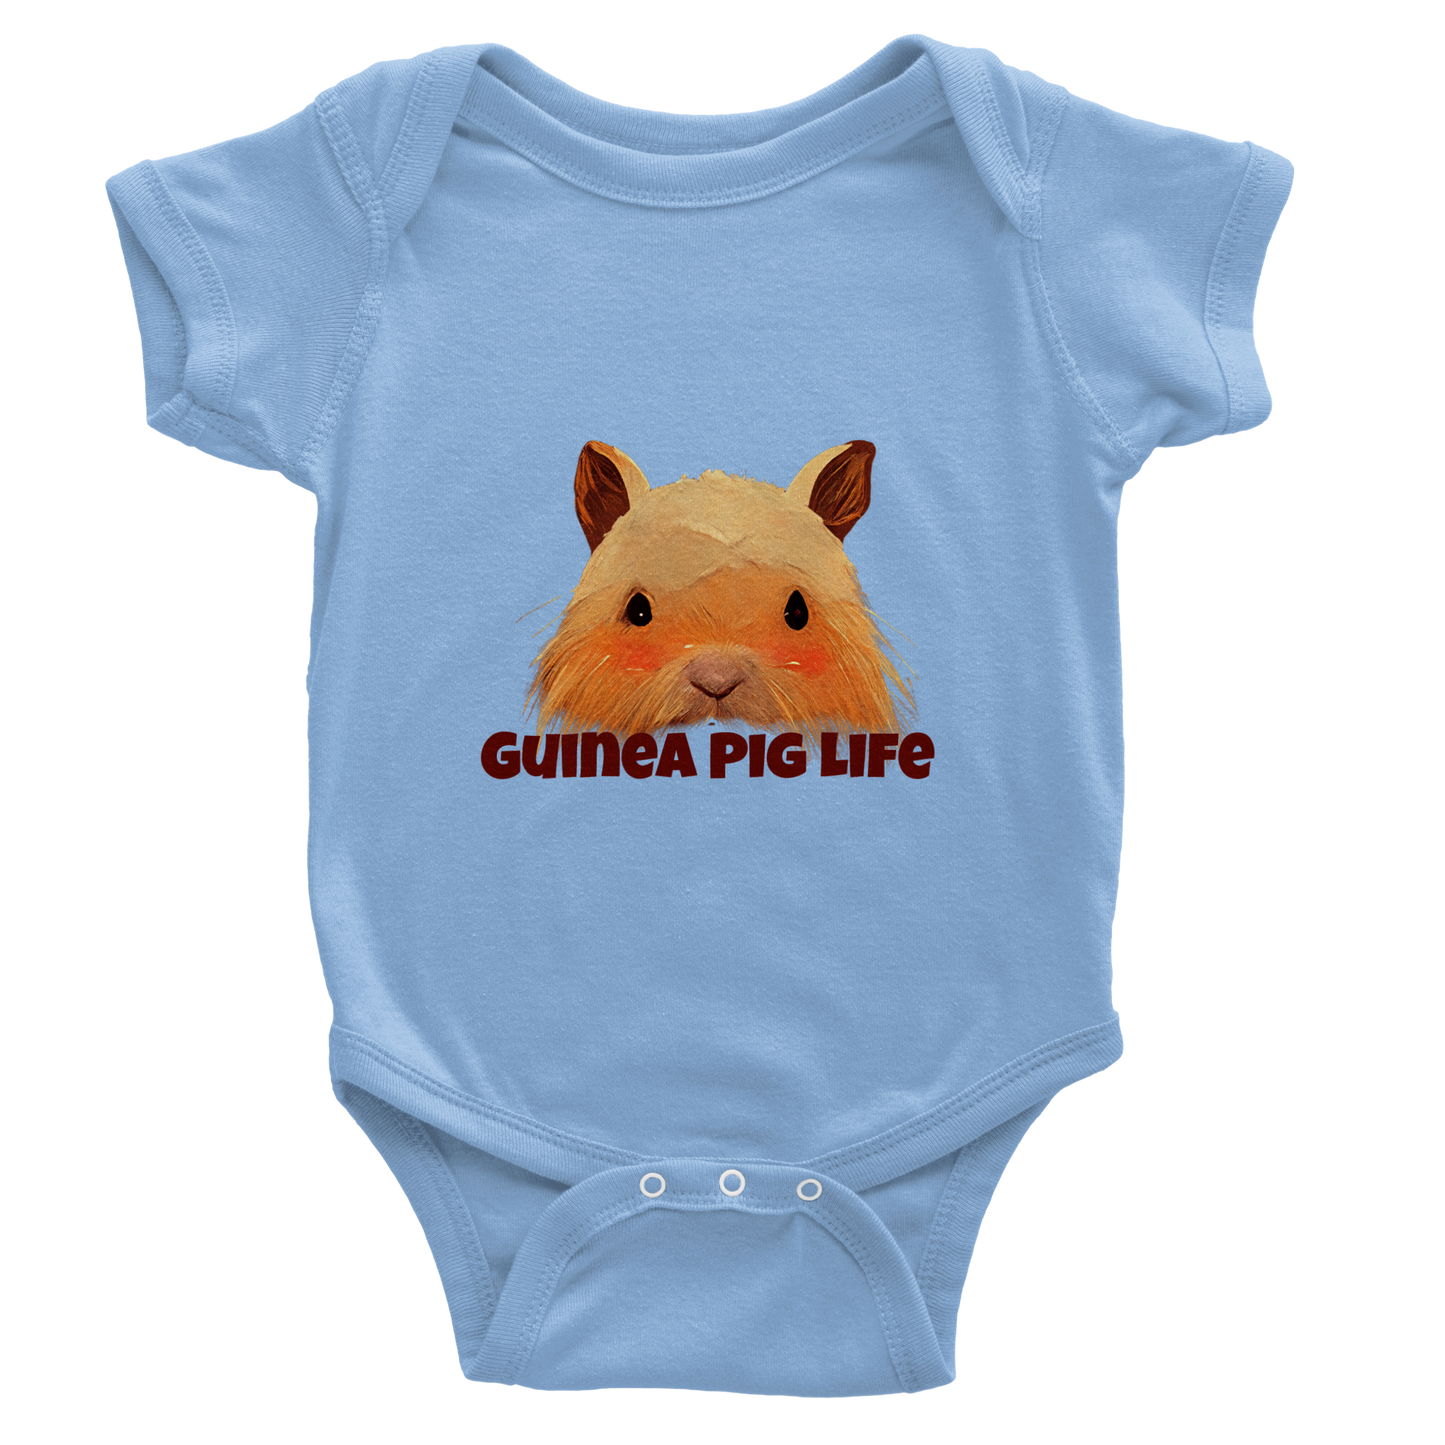 Blue short sleeve baby onesie with cute Guinea Pig life print